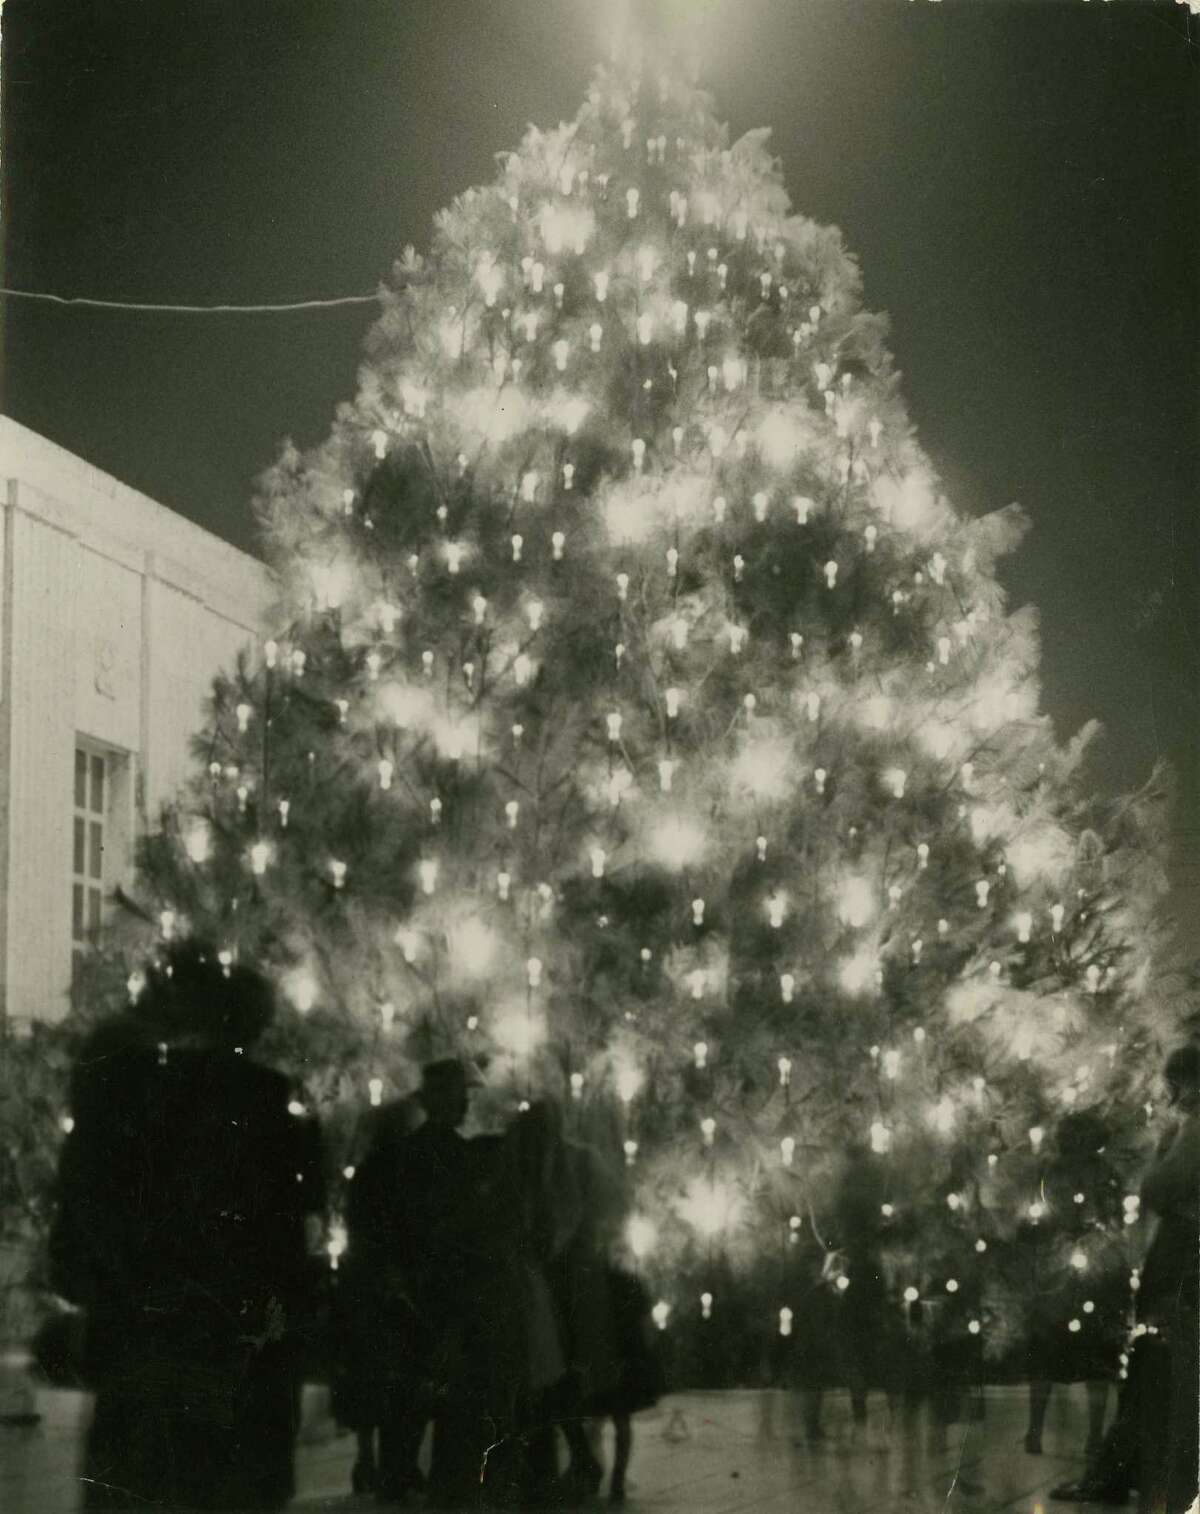 December 15, 1950: The Tree of Light outside Houston's City Hall.